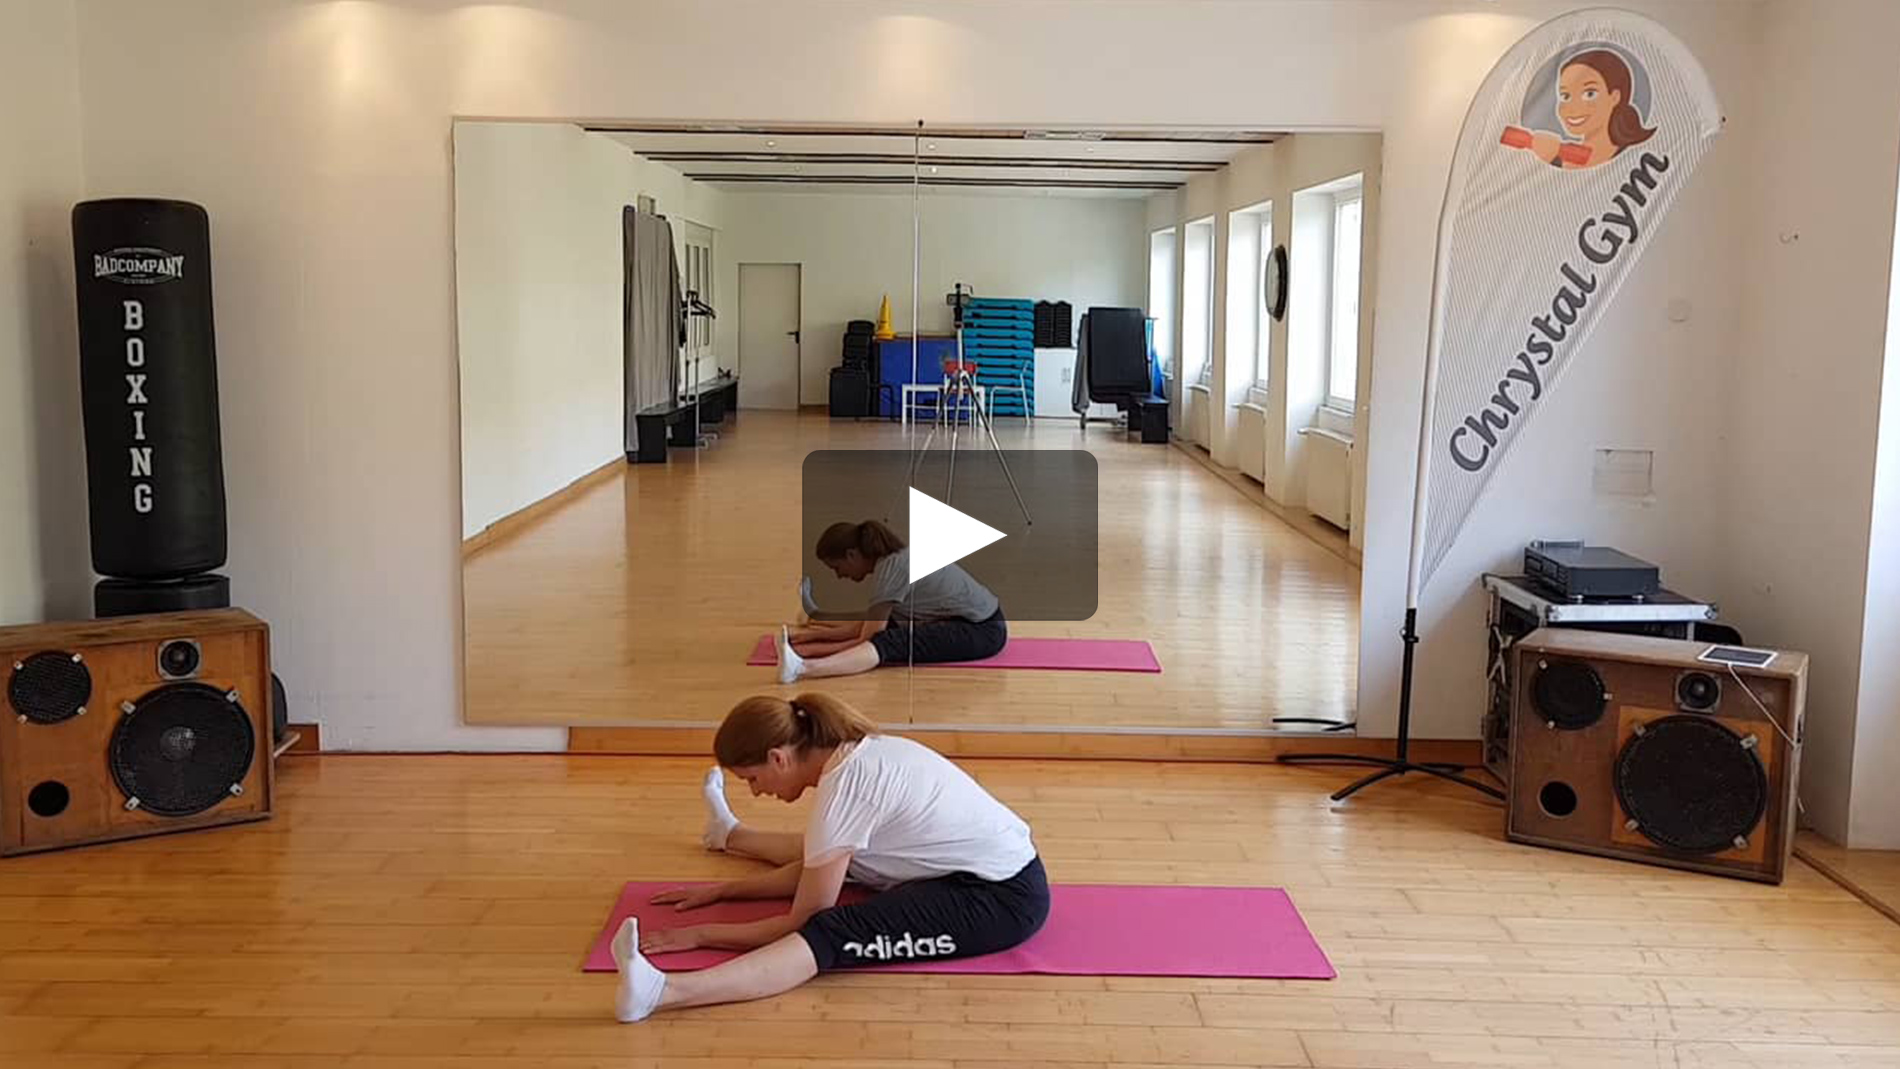 Rücken Gym 2: Stretching Workout | Chrystal Gym Video